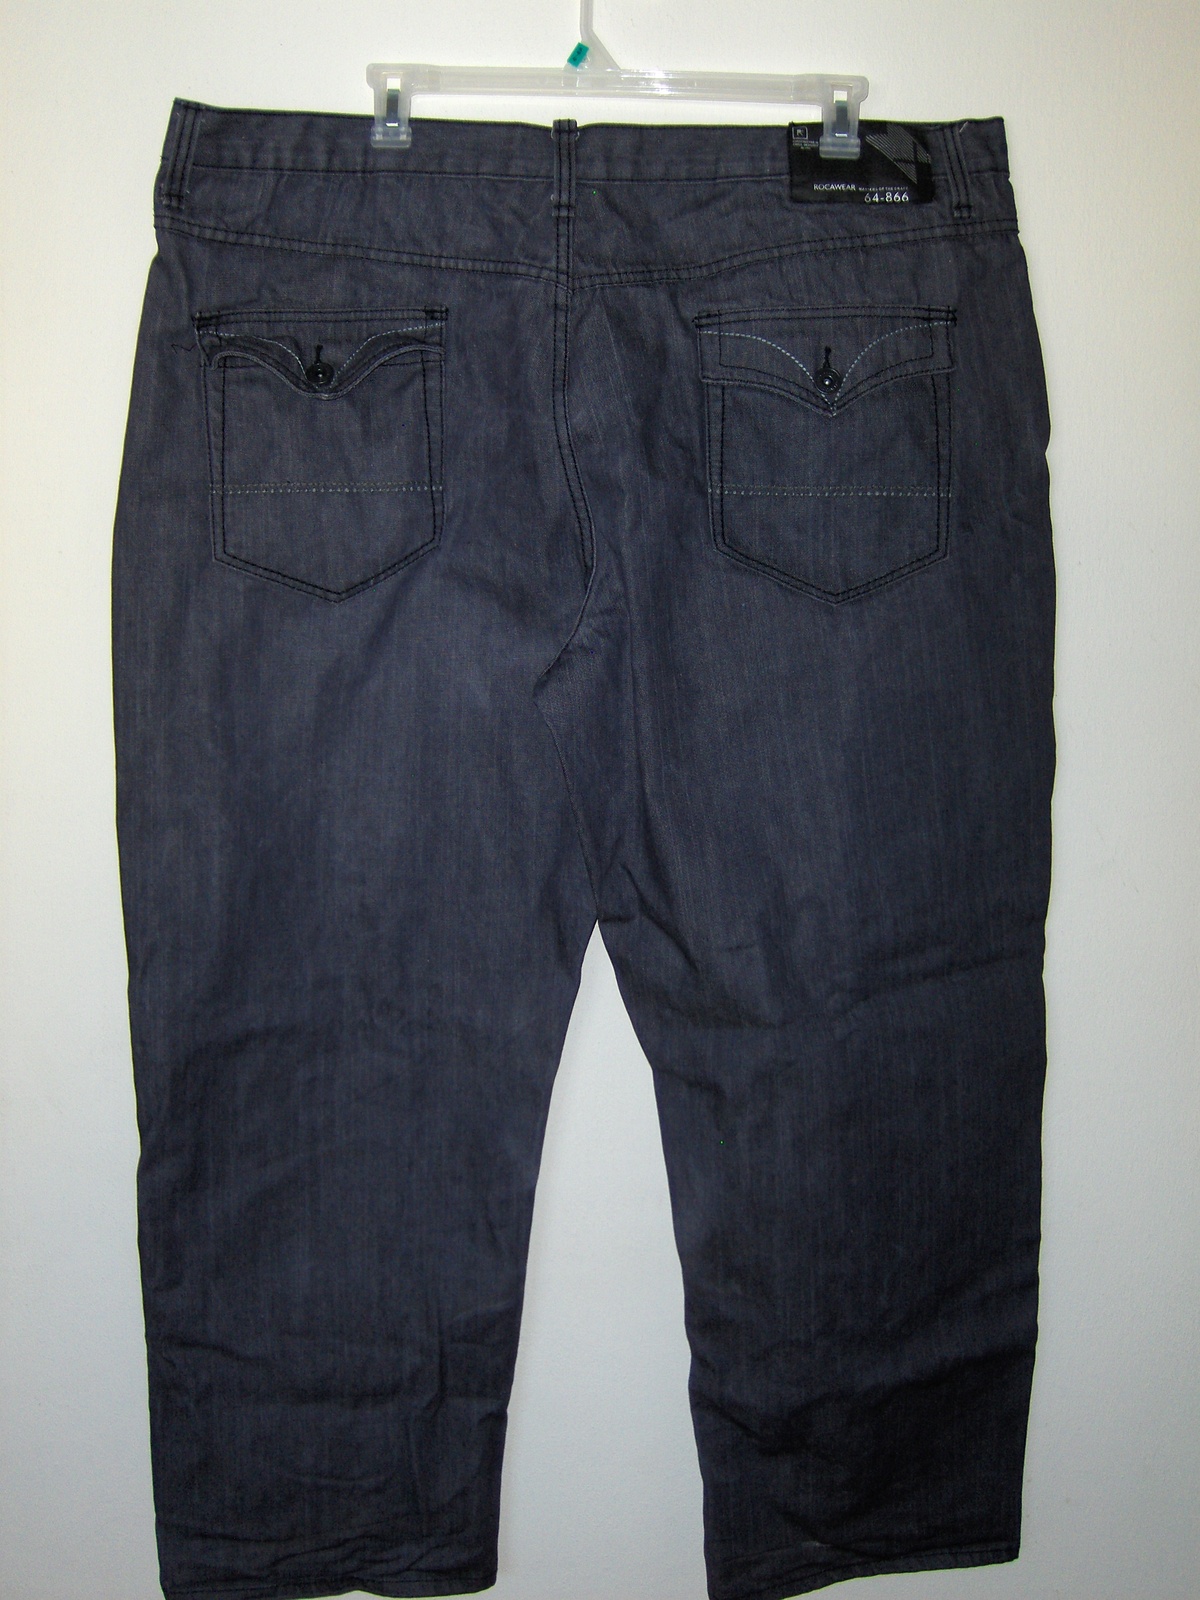 Mens Rocawear Black Jeans Size 50 X 32 Length 64-866 - Jeans